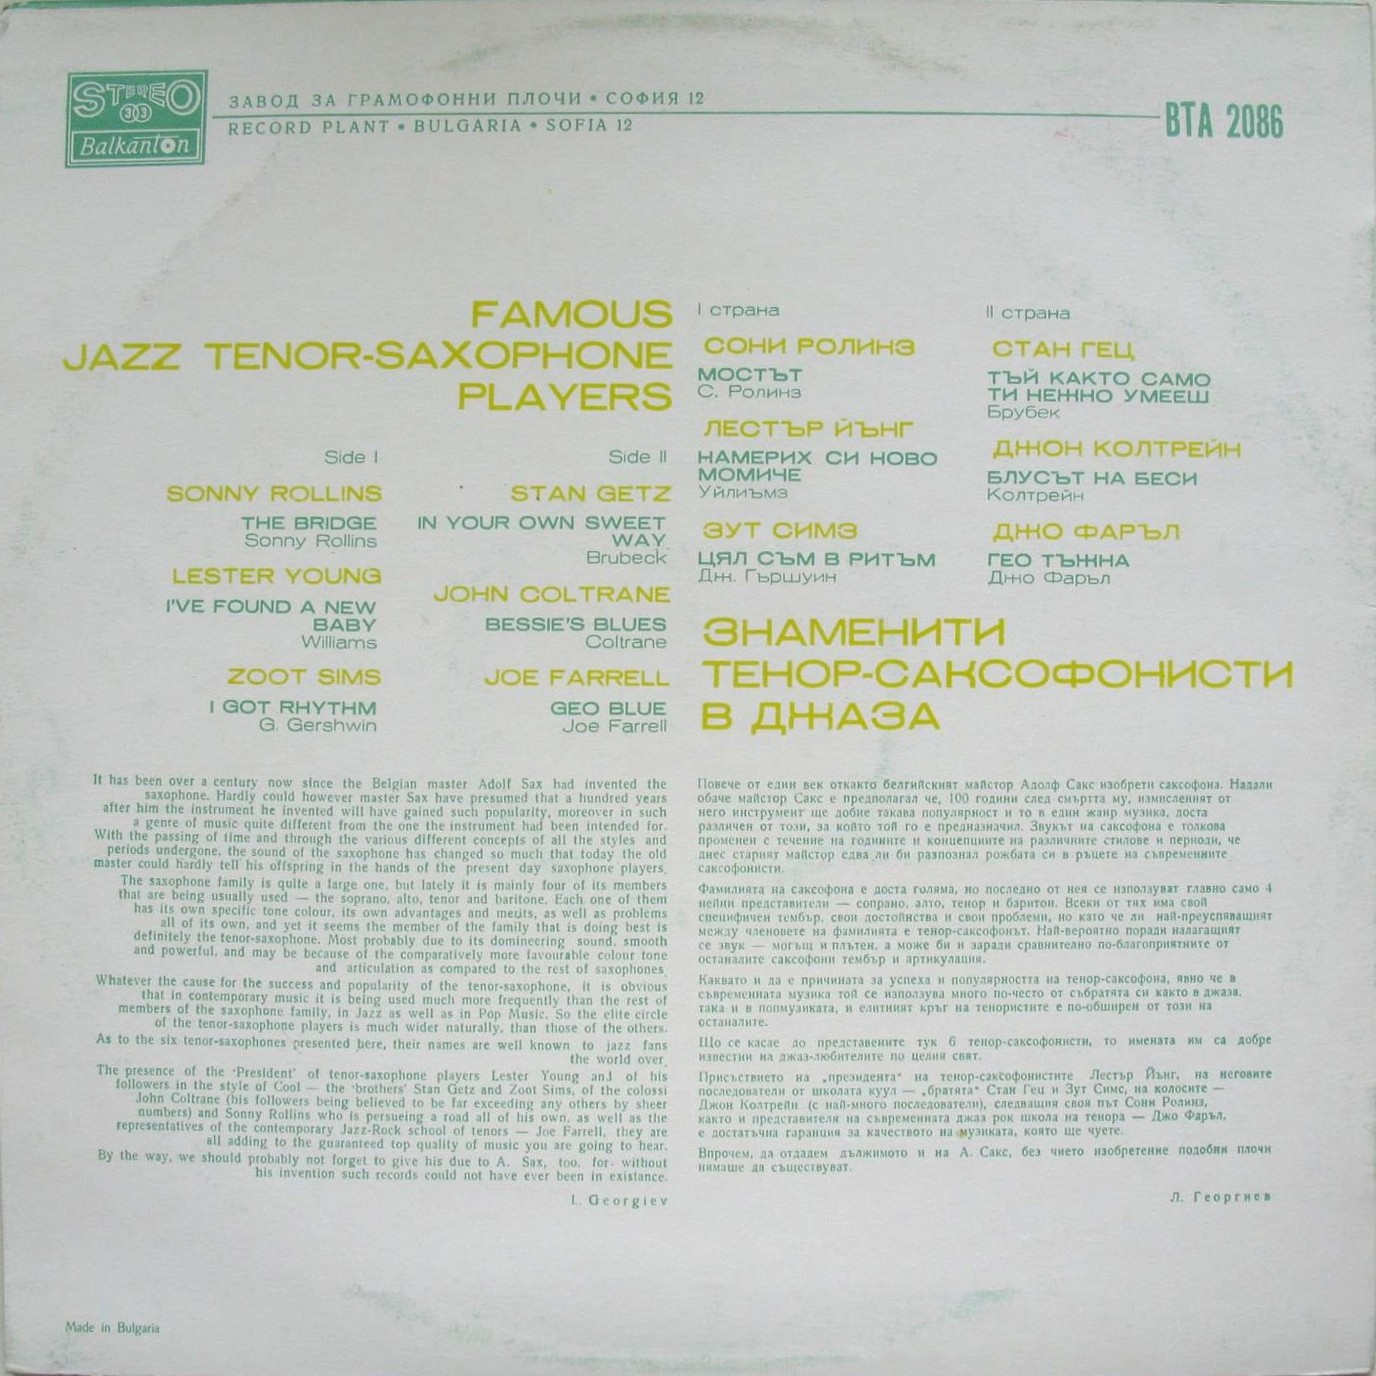 Знаменити тенор-саксофонисти в джаза